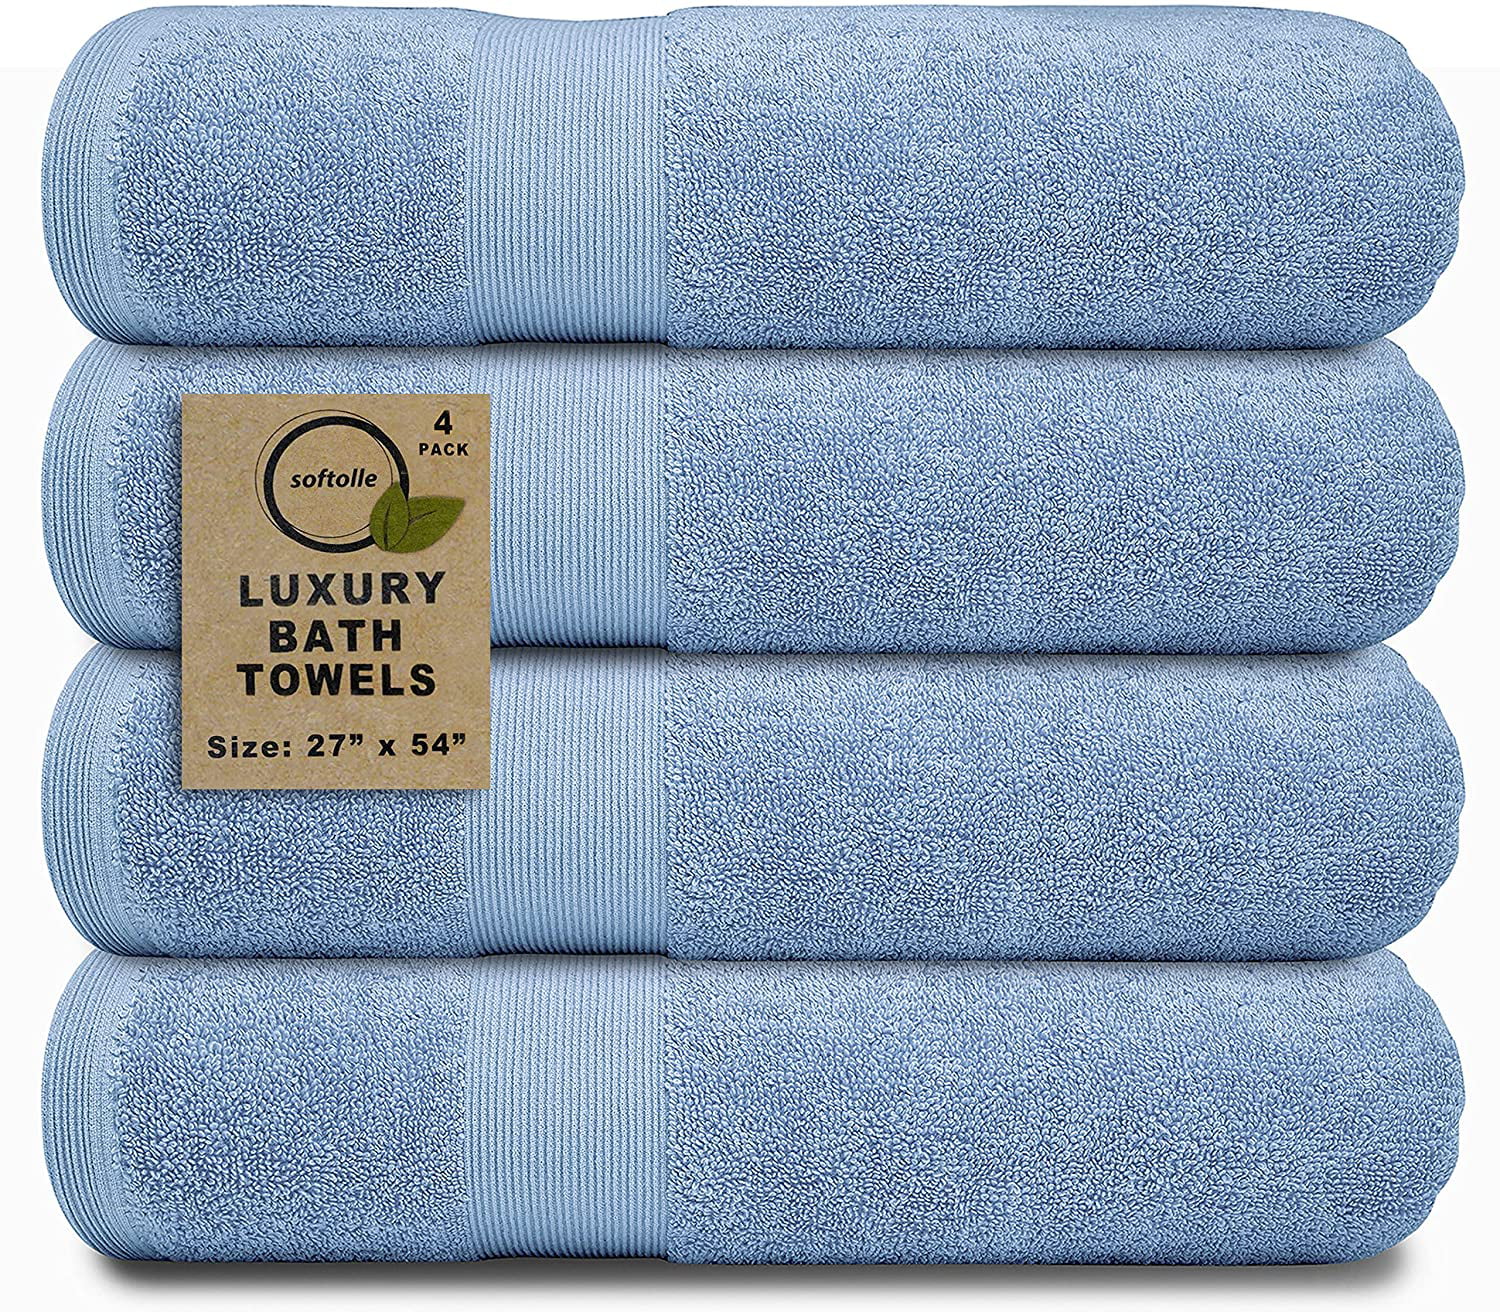 Blue and White,1 Bath Towel,600 GSM SEMAXE Striped Bath Towel Premium Bathroom Towel Highly Absorbent